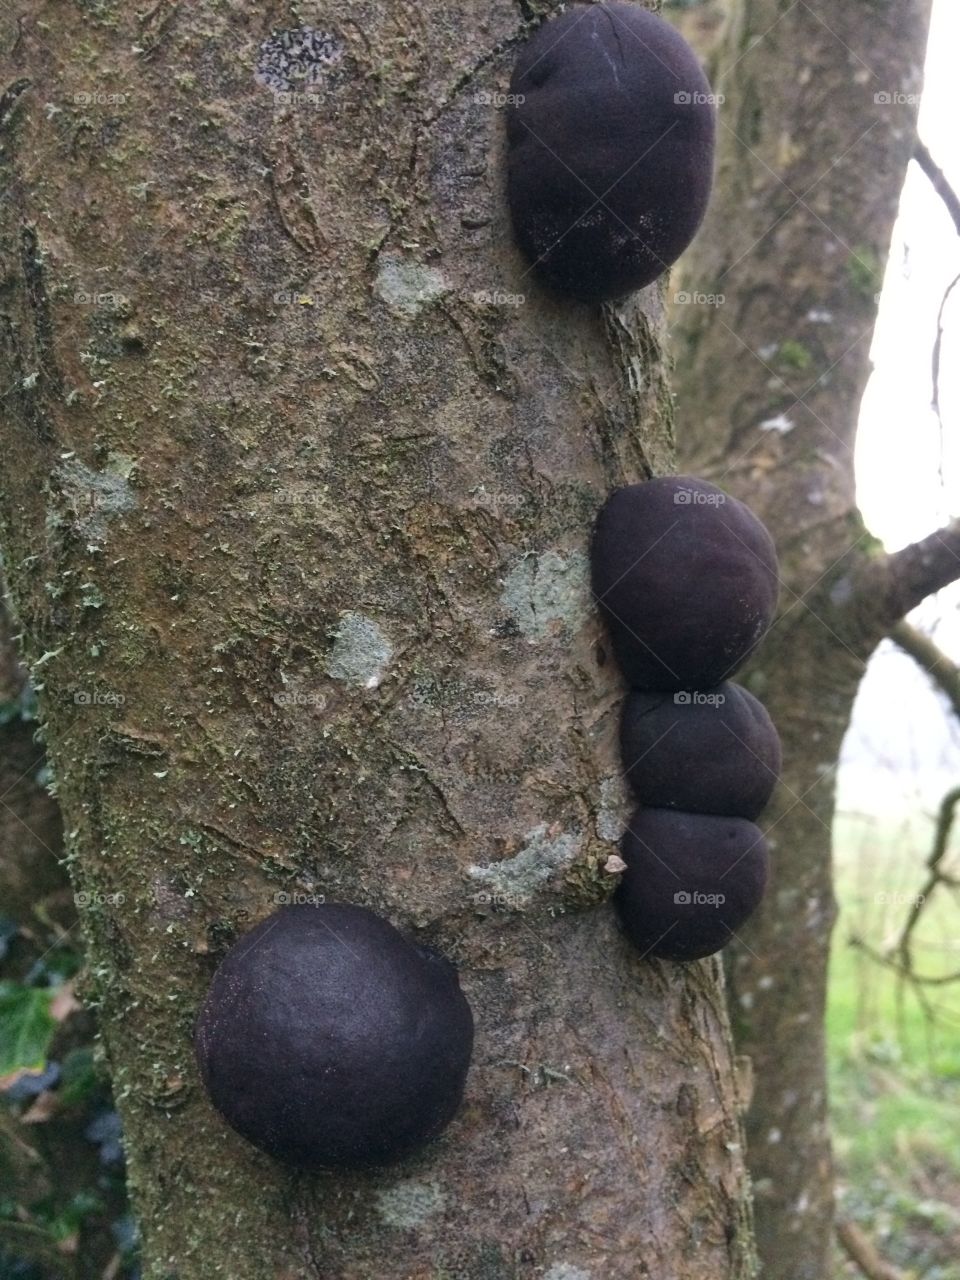 Spheroidal fungus on side of tree